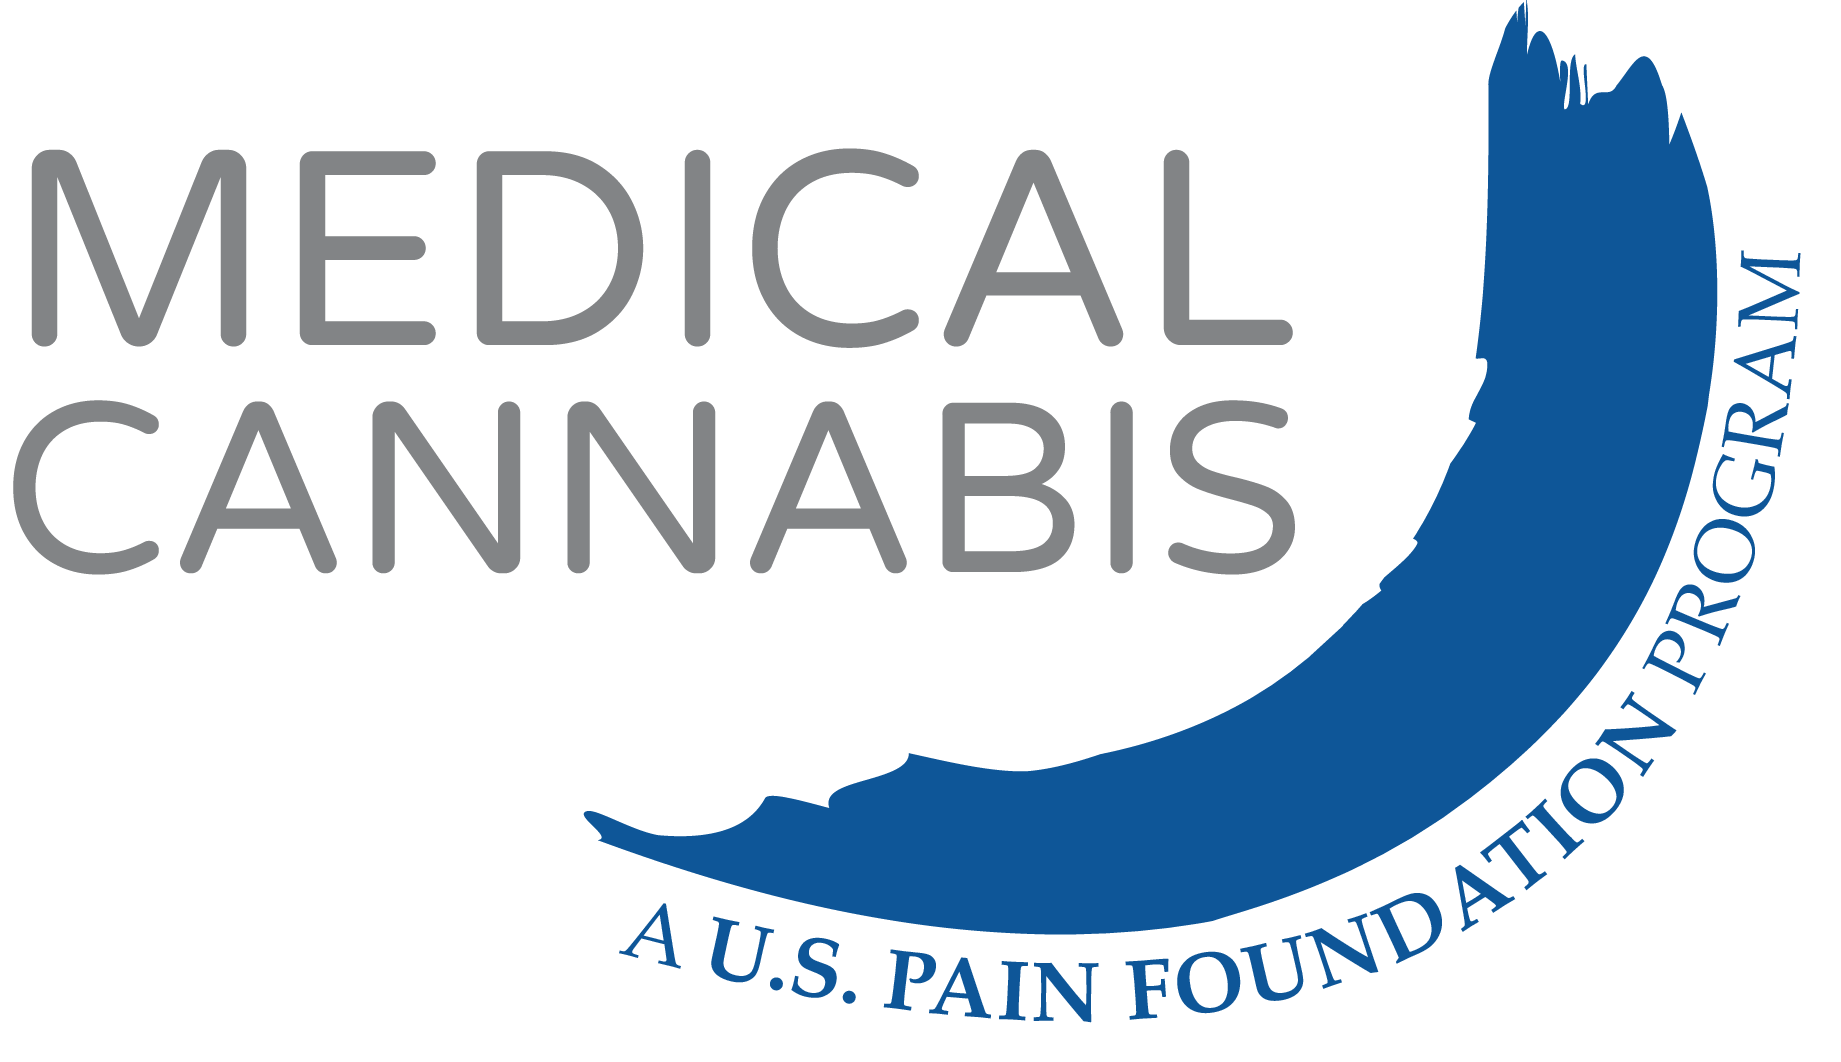 U.S. Pain Medical Cannabis